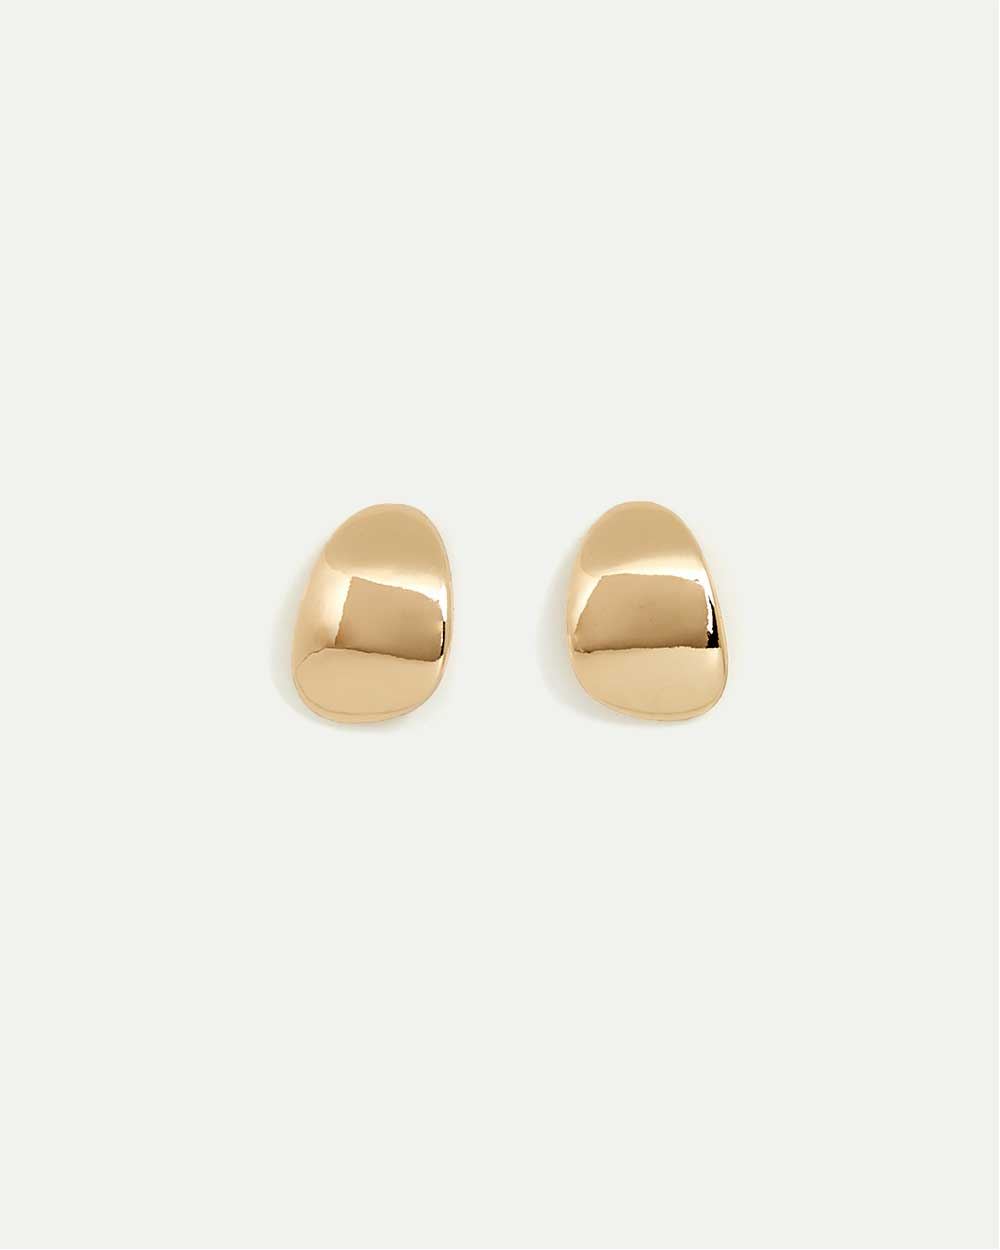 Organic Shaped Post Earrings